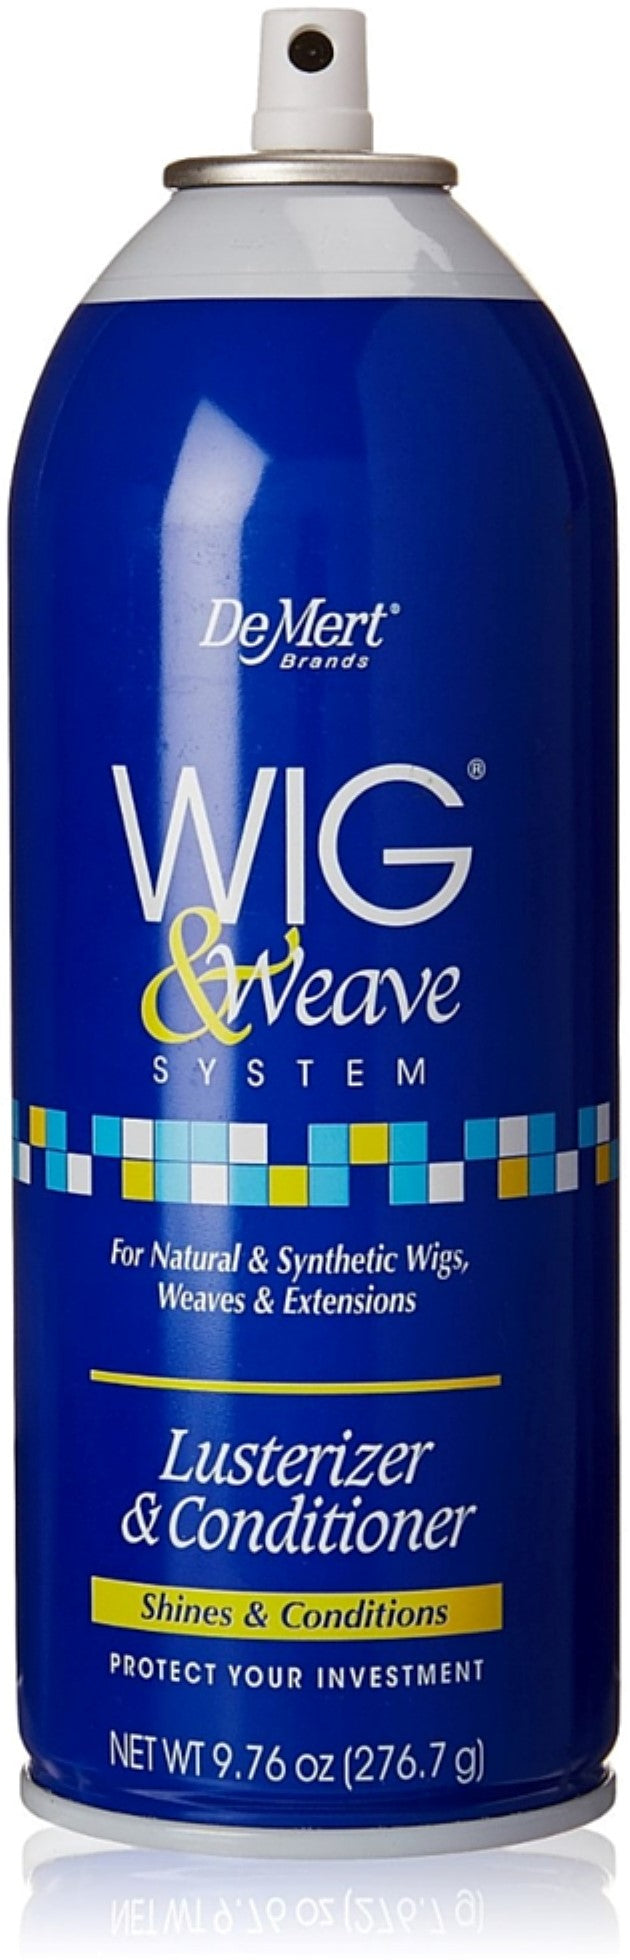 Demert Wig & Weave System Lusterizer & Conditioner 9.76 oz